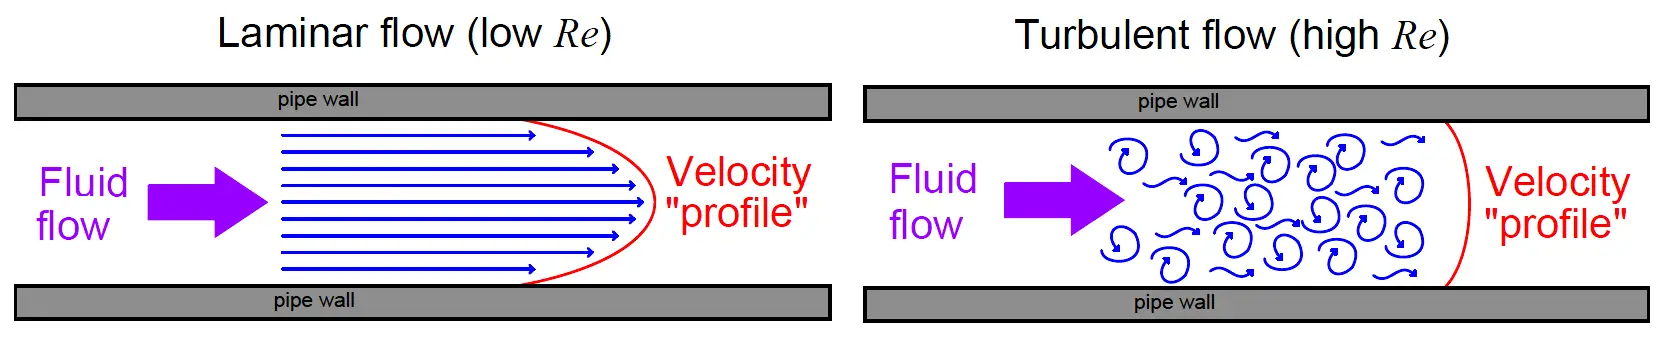 ultrasonic flowmeter Turbulent flow